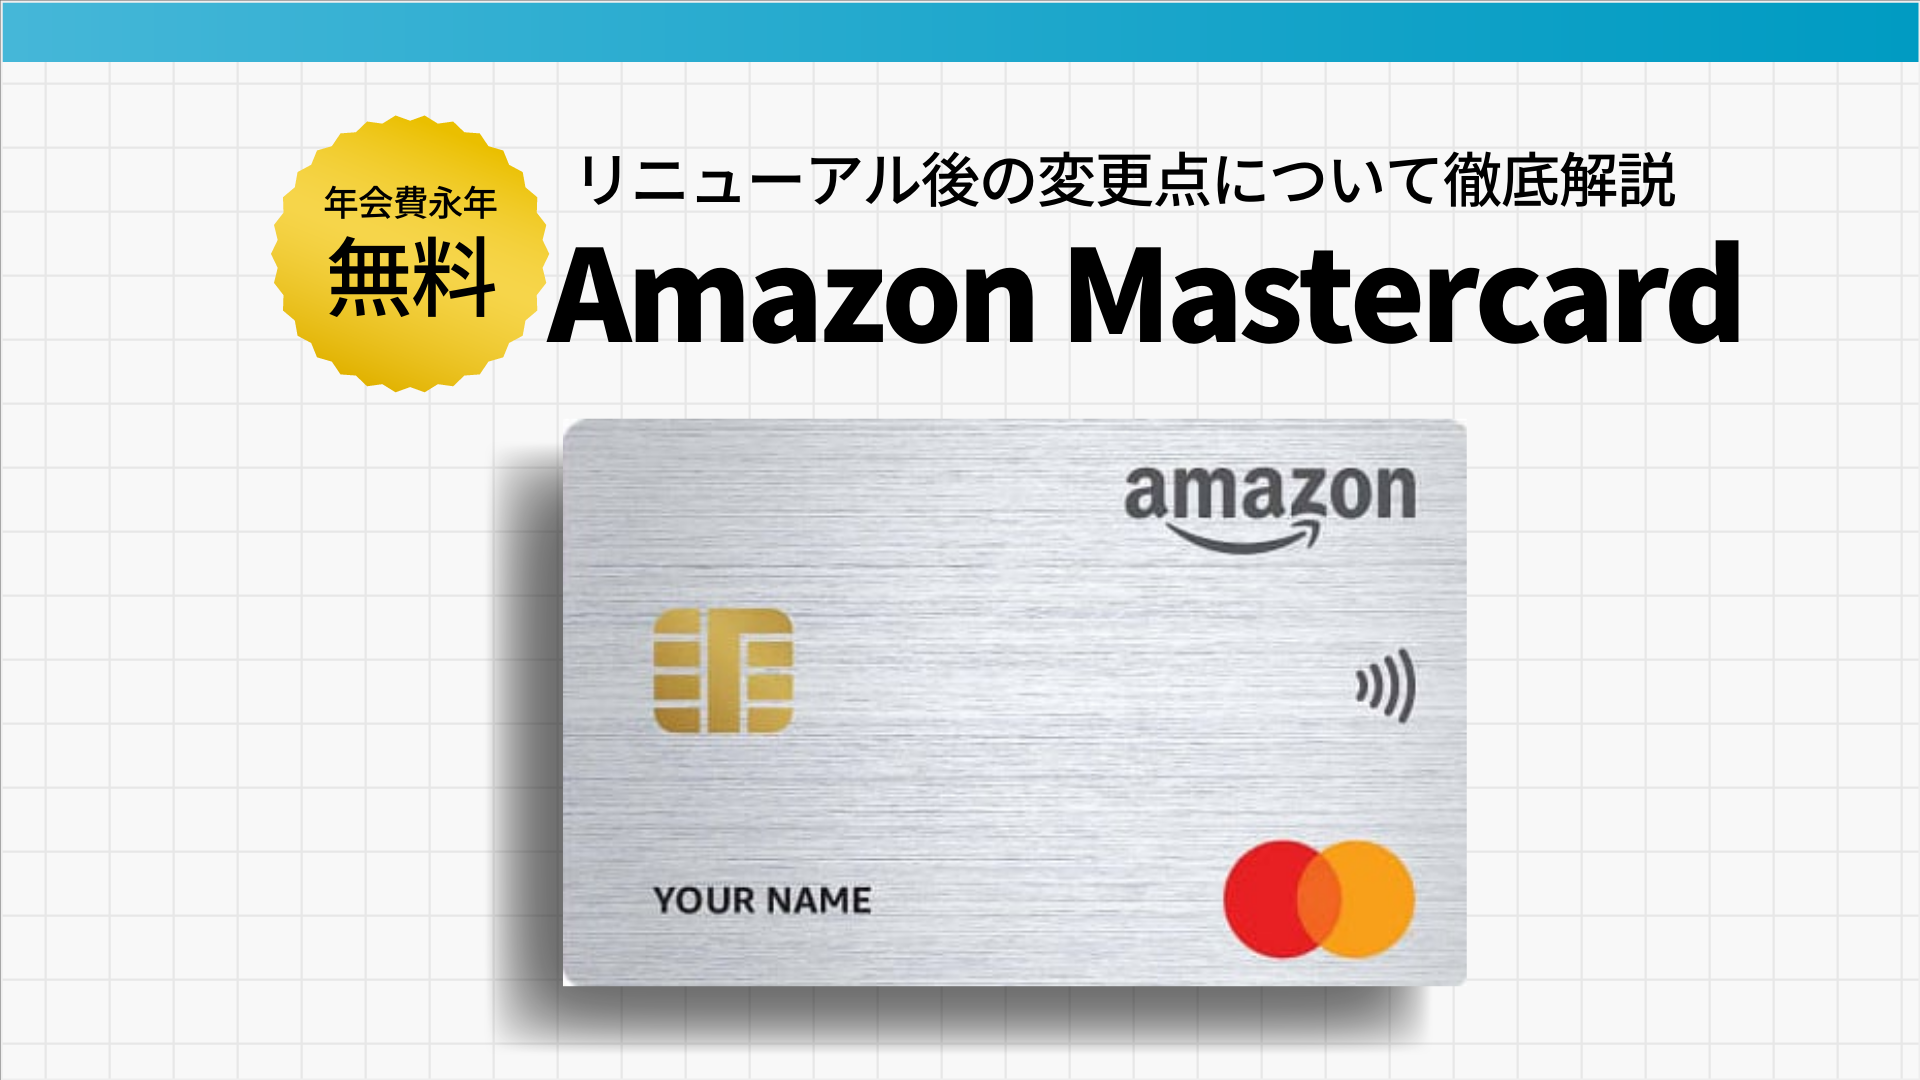 Amazon Mastercardの変更点は？